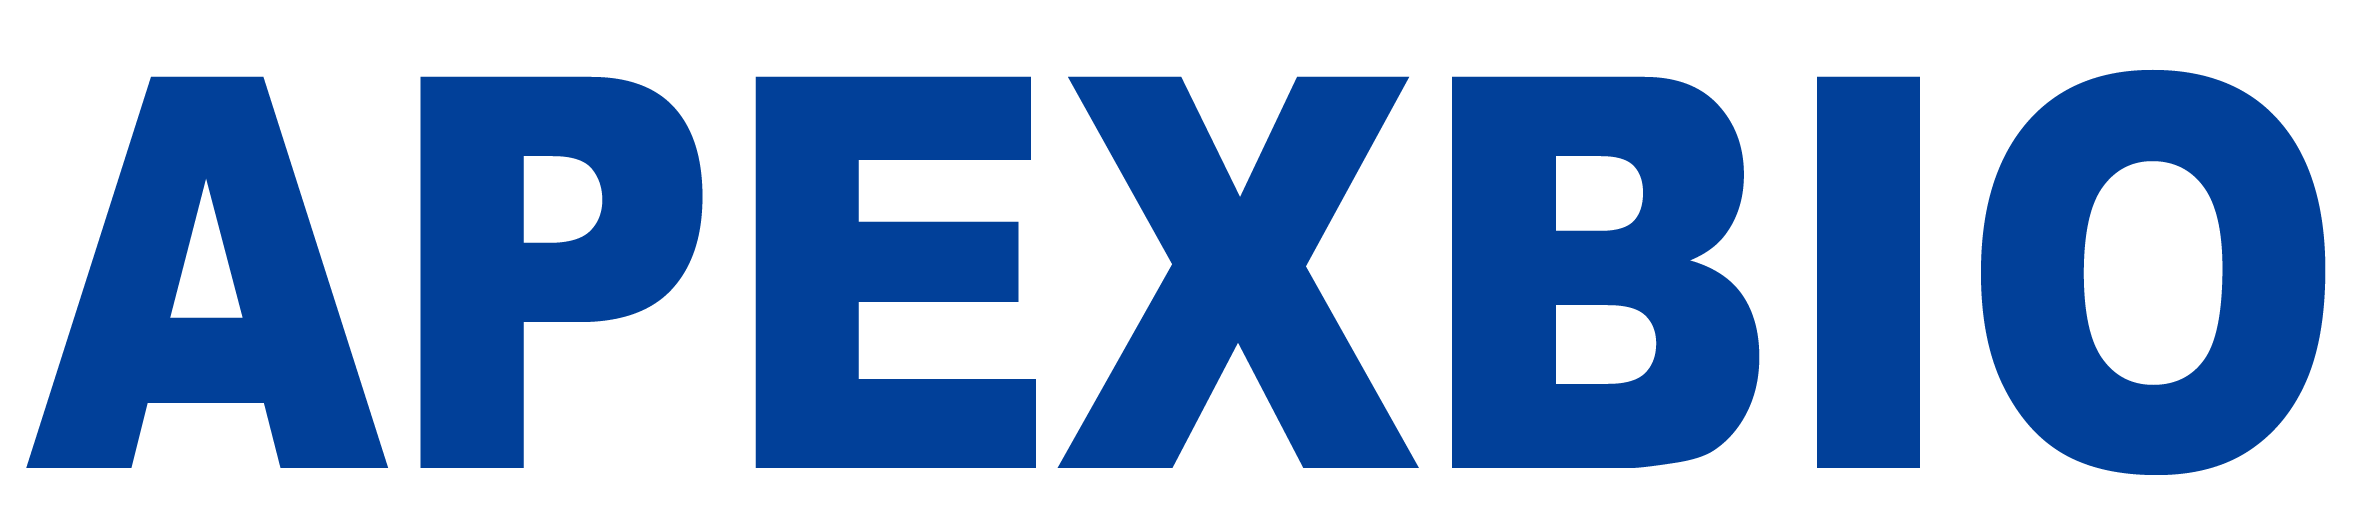 apexbio-logo.png